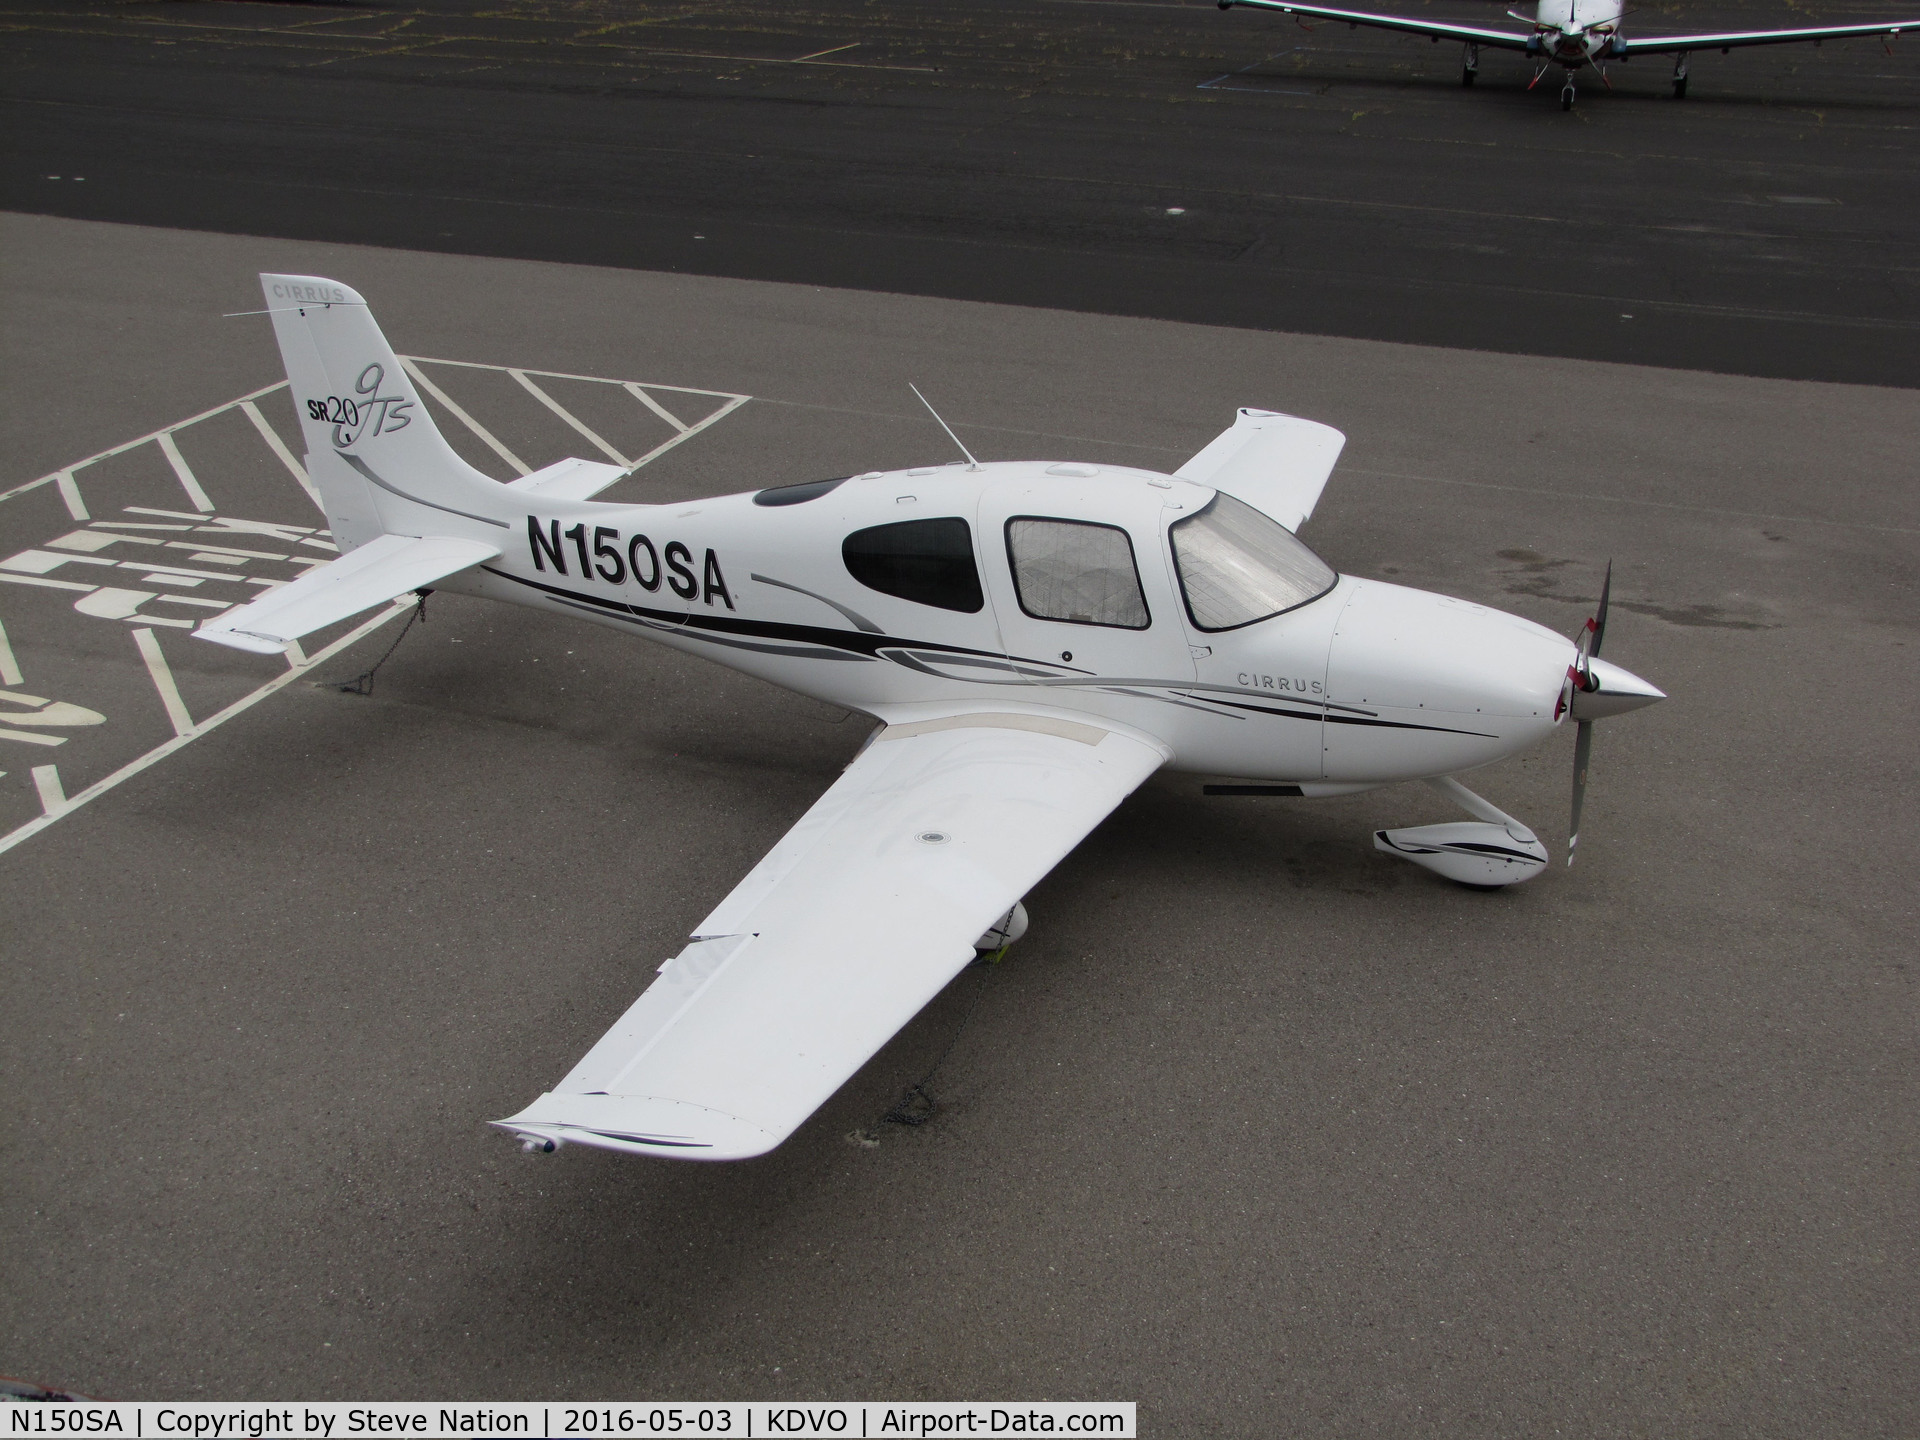 N150SA, 2007 Cirrus SR20 GTS C/N 1863, eehan Aviation (Sausalito, CA) 2007 Cirrus SR20 from observation deck @ Gnoss Field, Novato, CA